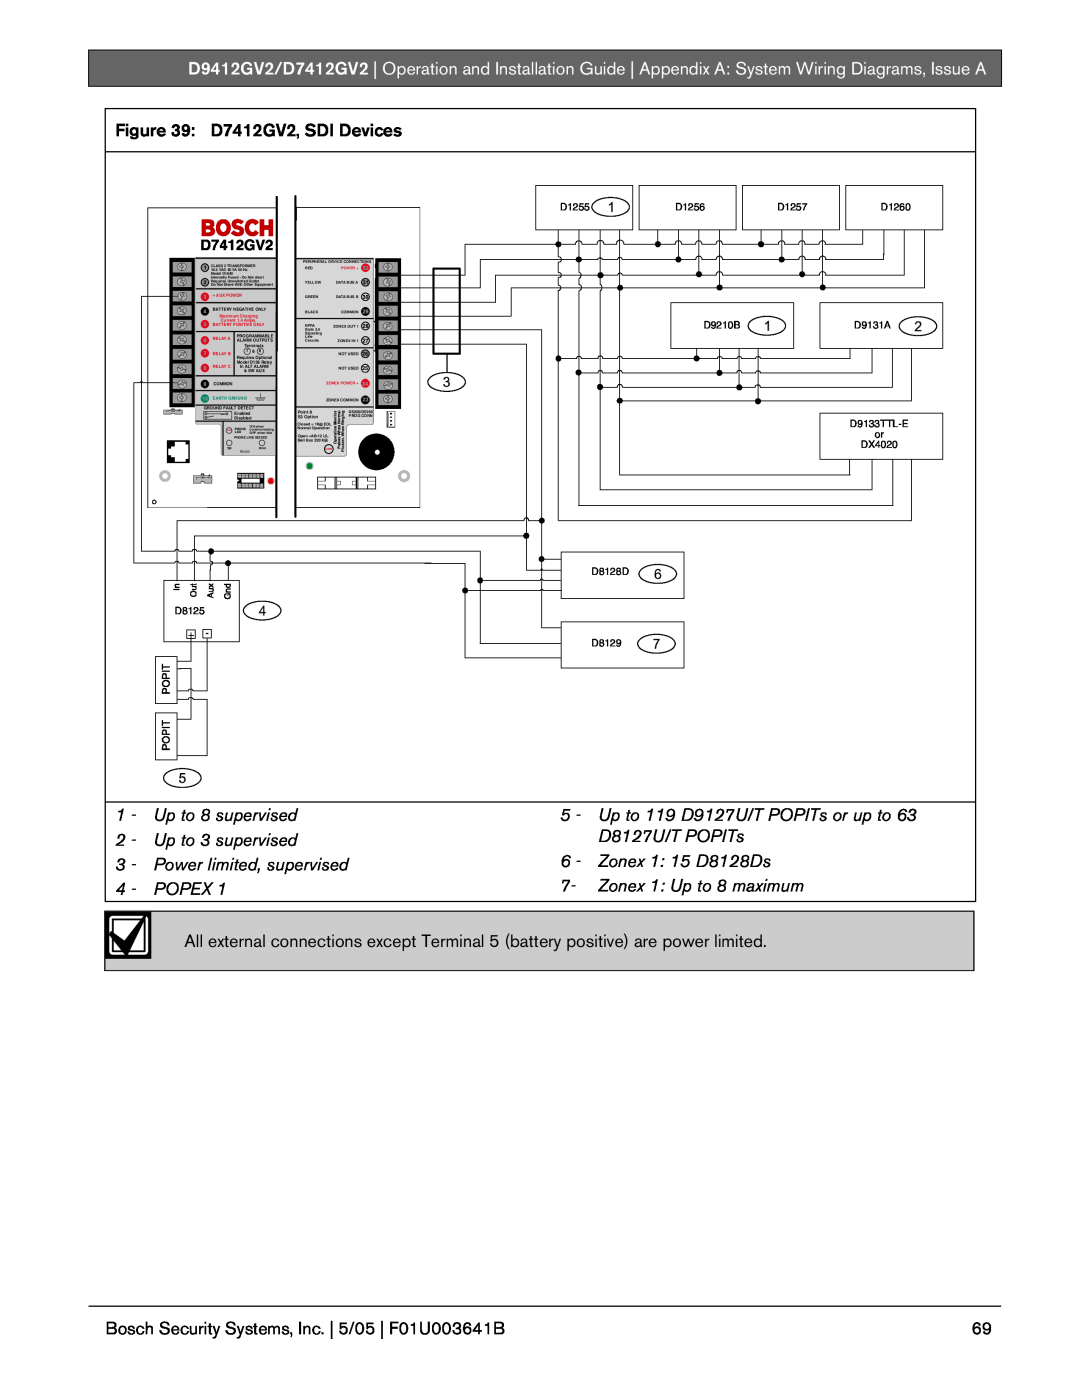 Bosch Appliances D9412GV2 D7412GV2, SDI Devices, Bosch Security Systems, Inc. | 5/05 | F01U003641B, Power +, + Aux Power 